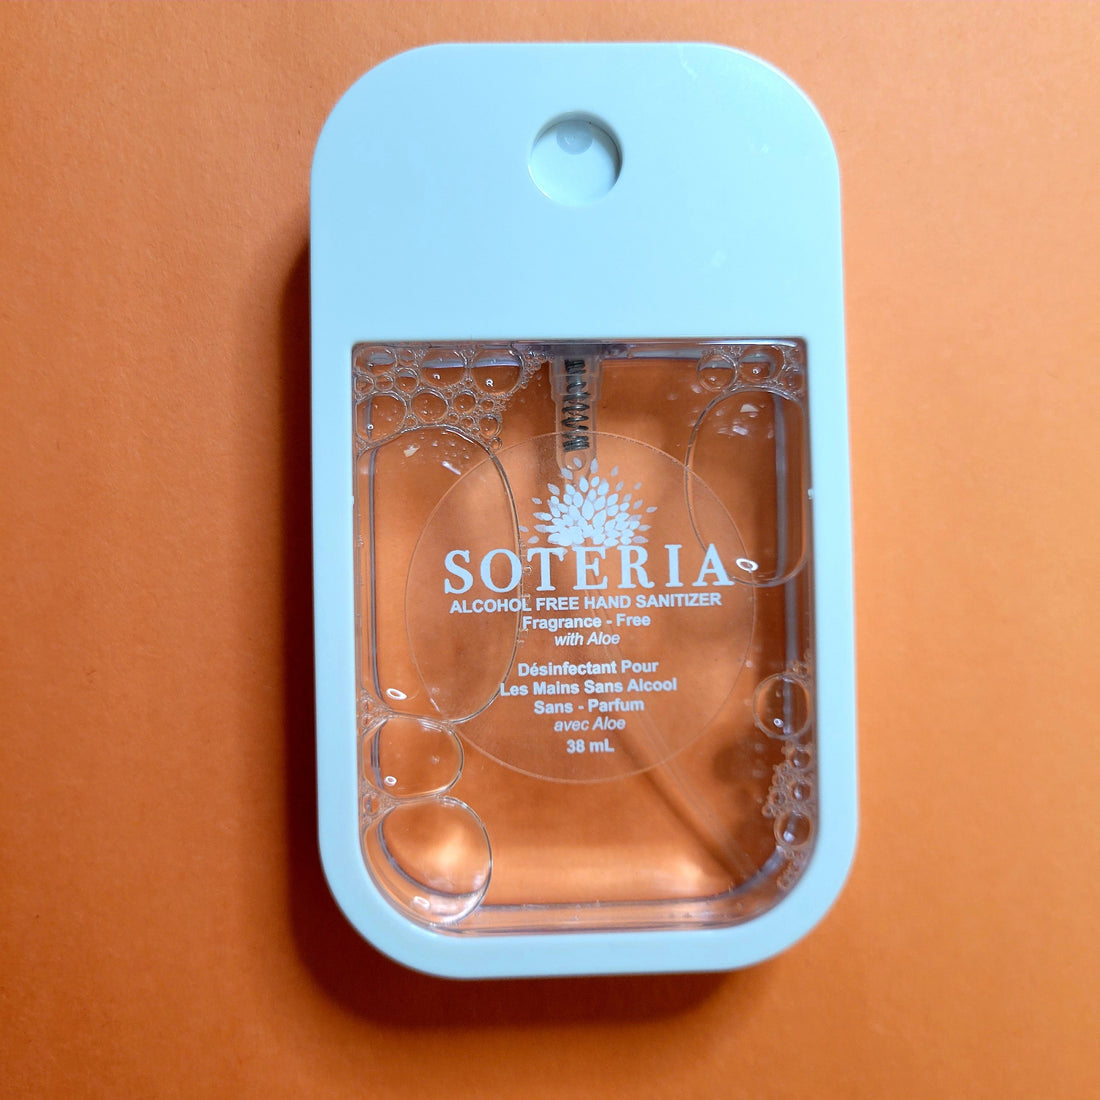 SOTERIA Alcohol-free Hand Sanitizer Spray 38mL